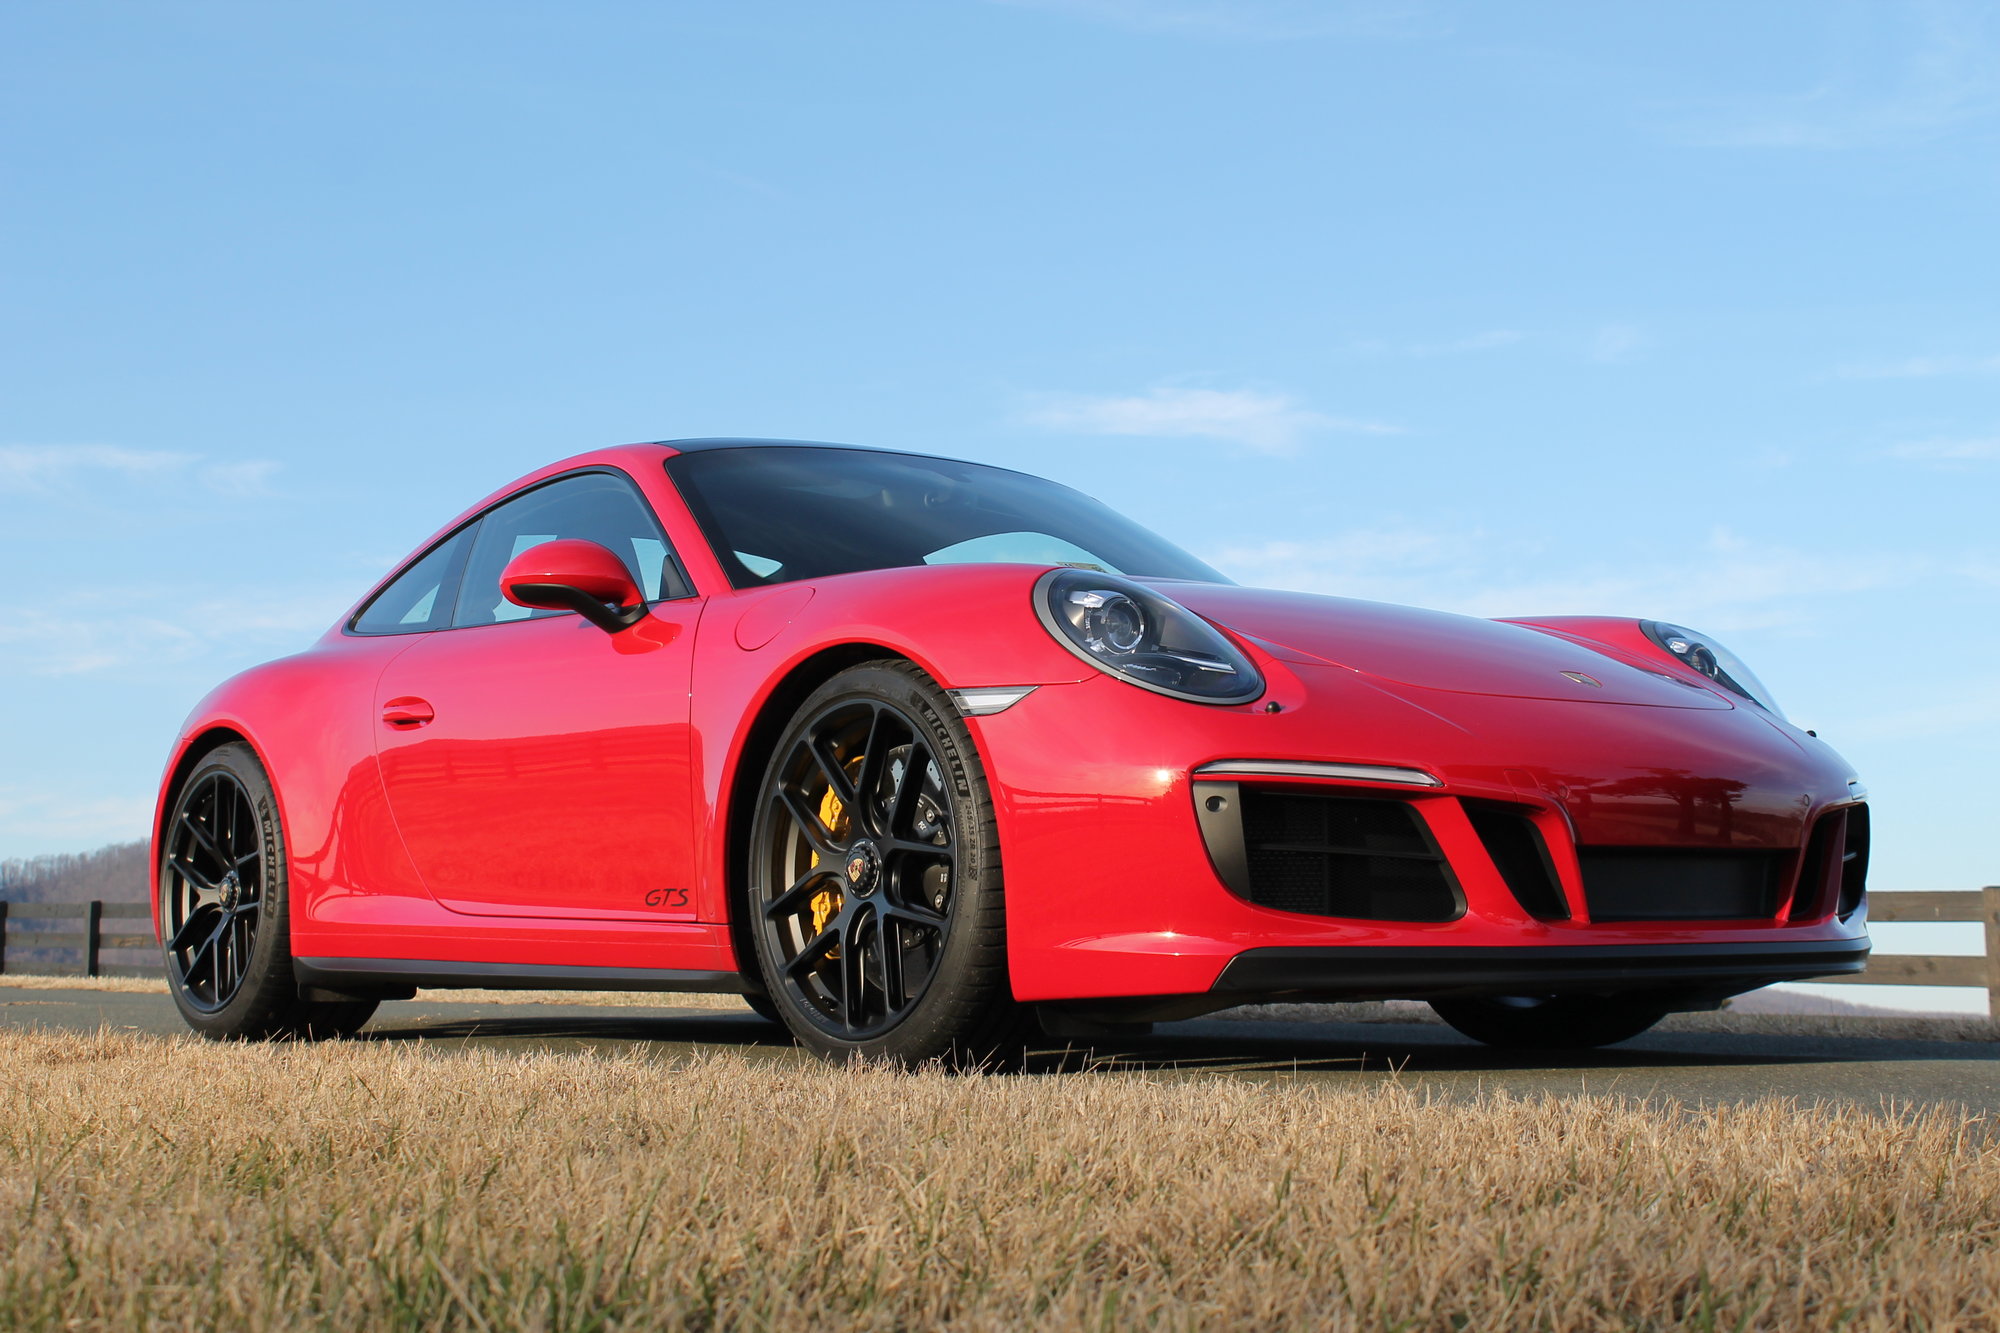 991.2 GTS picture thread - Page 30 - Rennlist - Porsche Discussion Forums